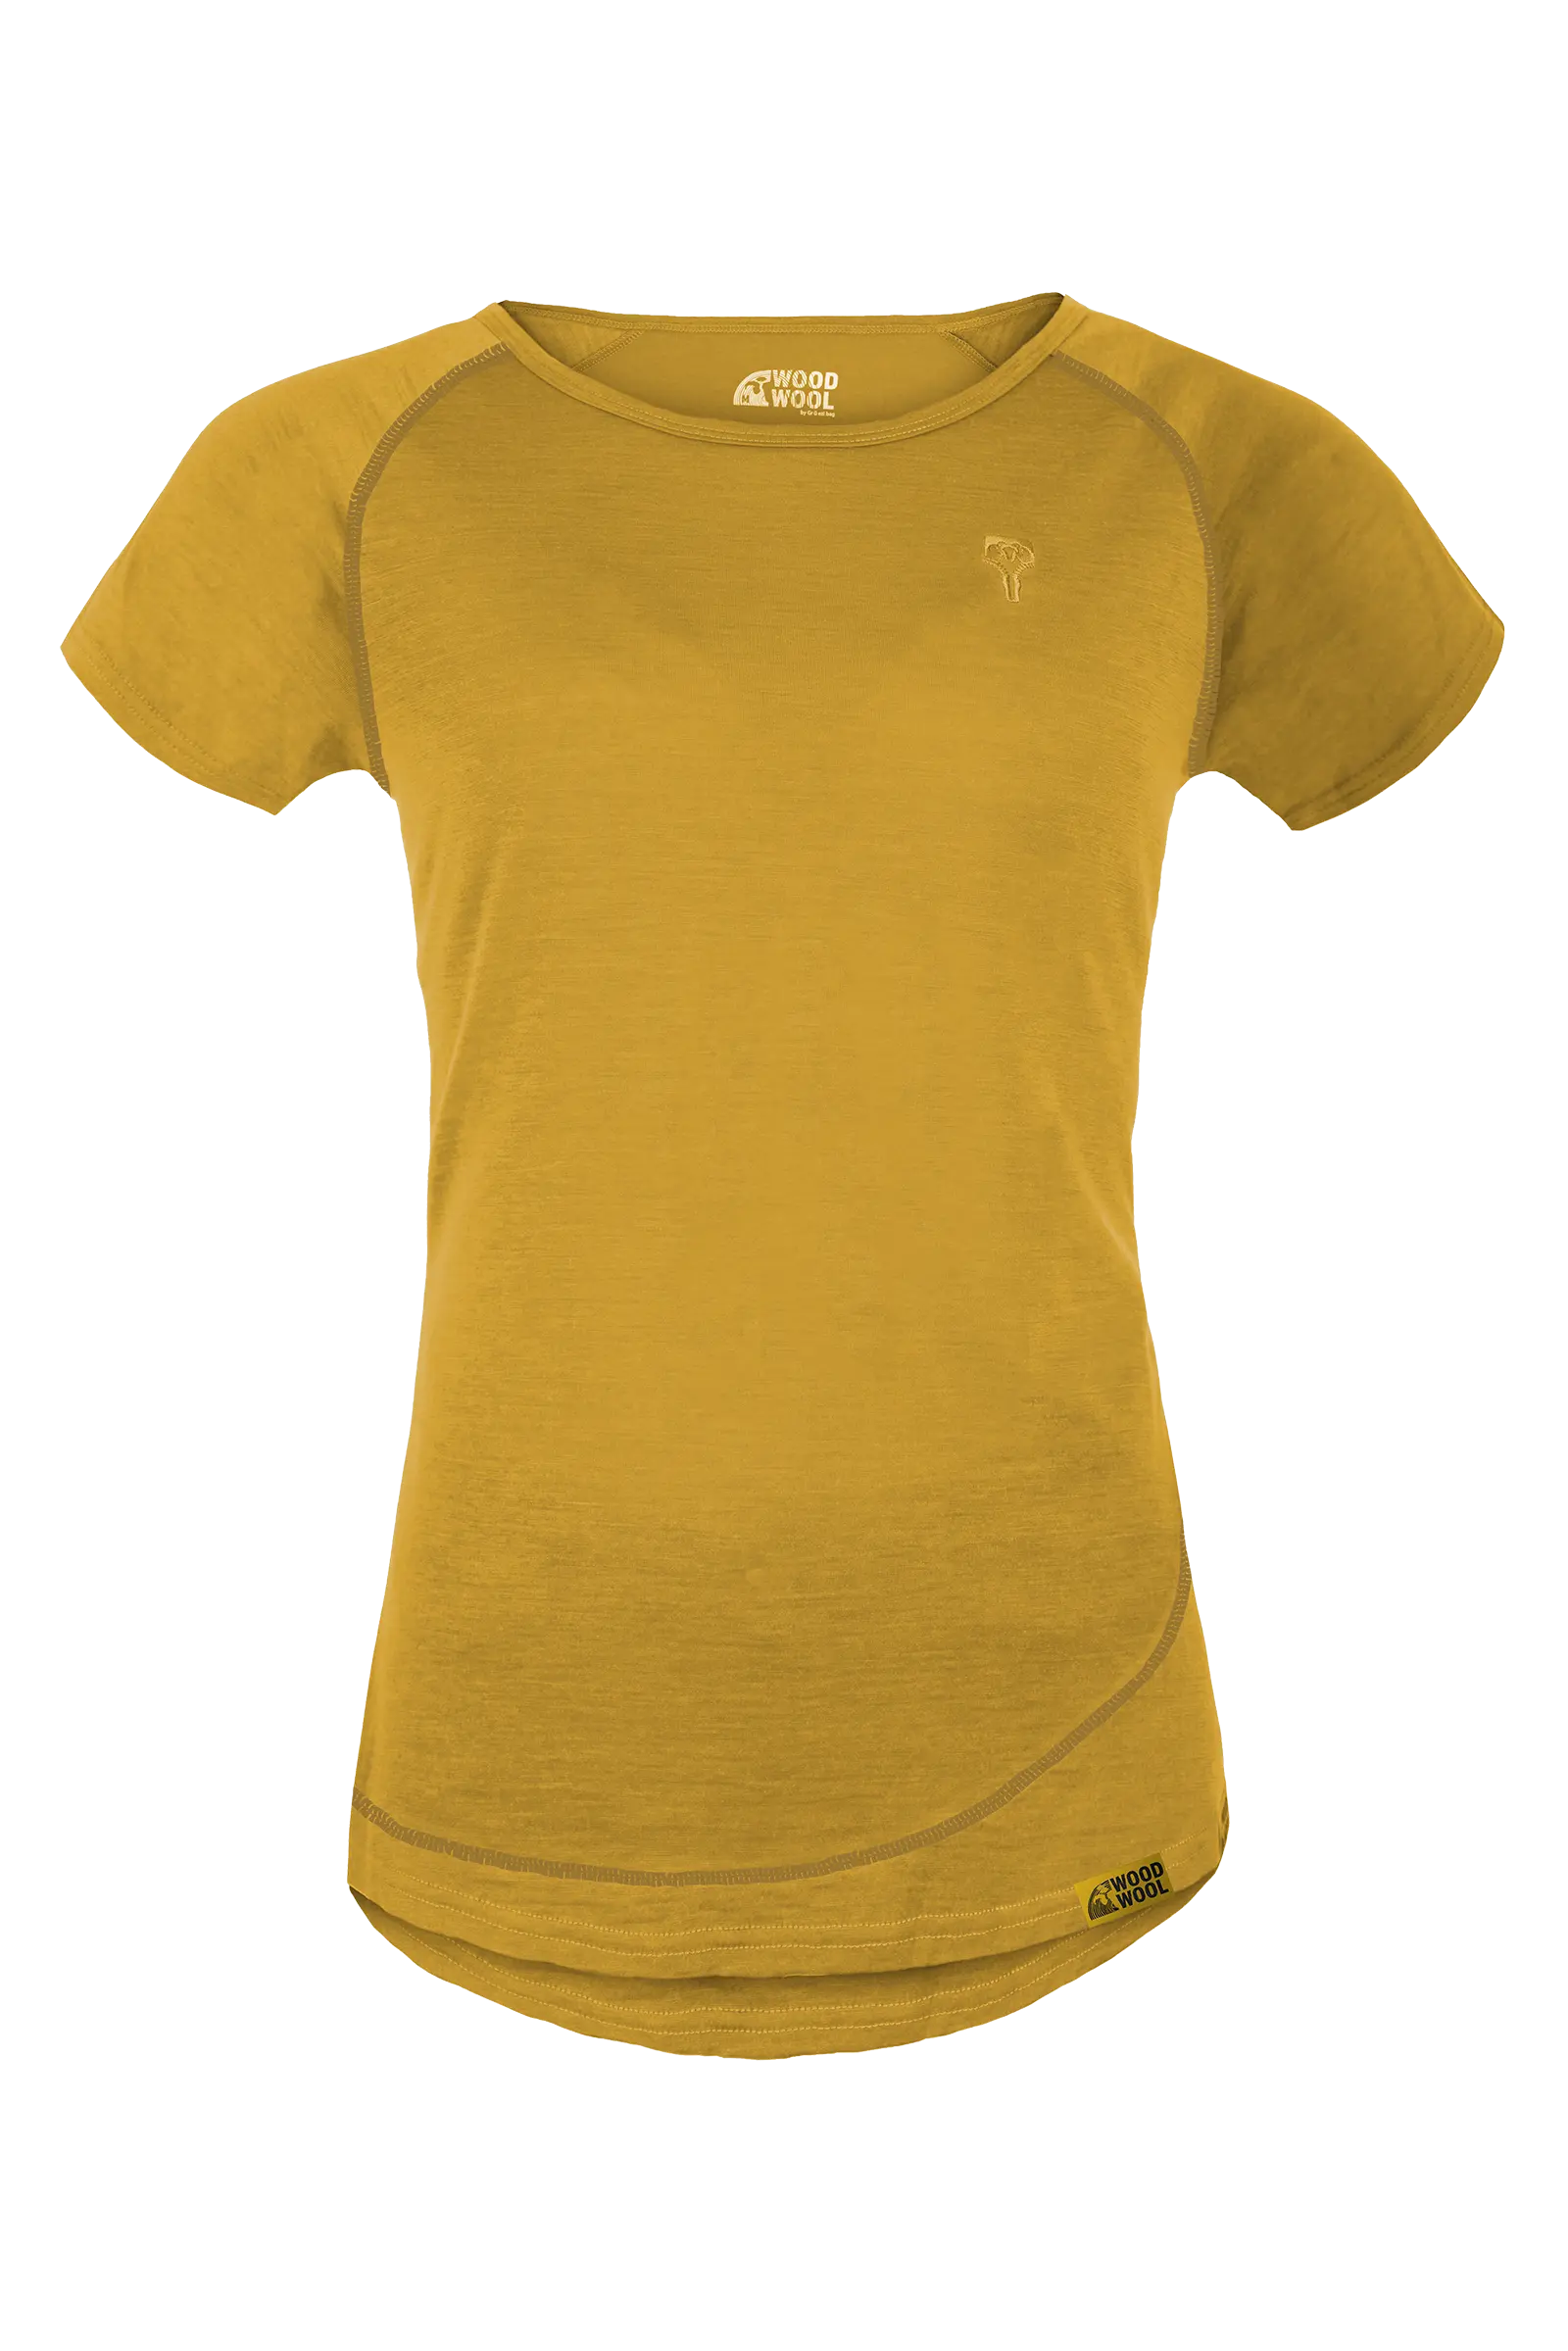 gruezi-bag-woodwool-t-shirt-lady-burnham-2250-2254-daisy-daze-yellow-amainfrei Kopie